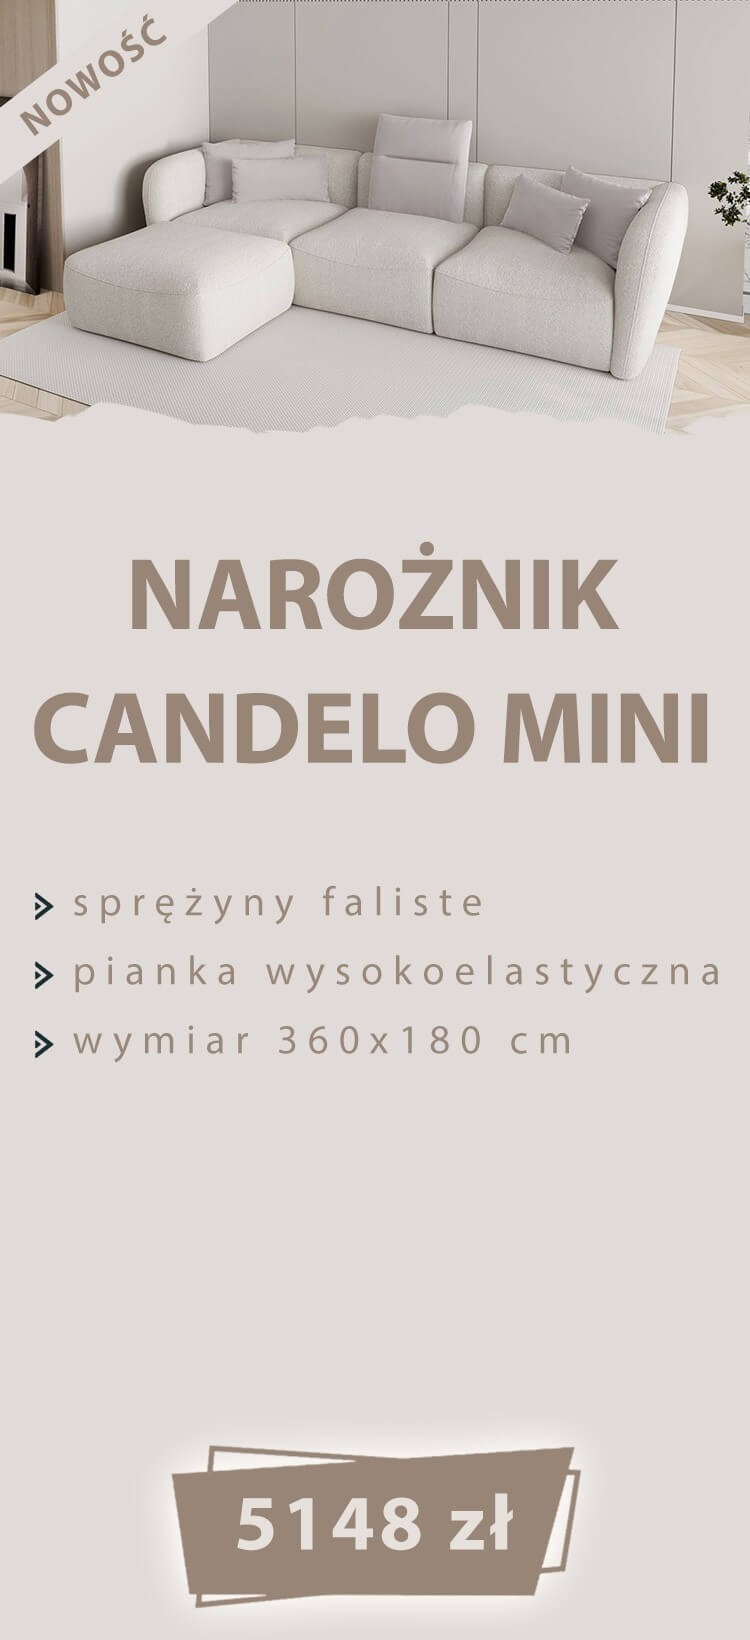 Candelo mini